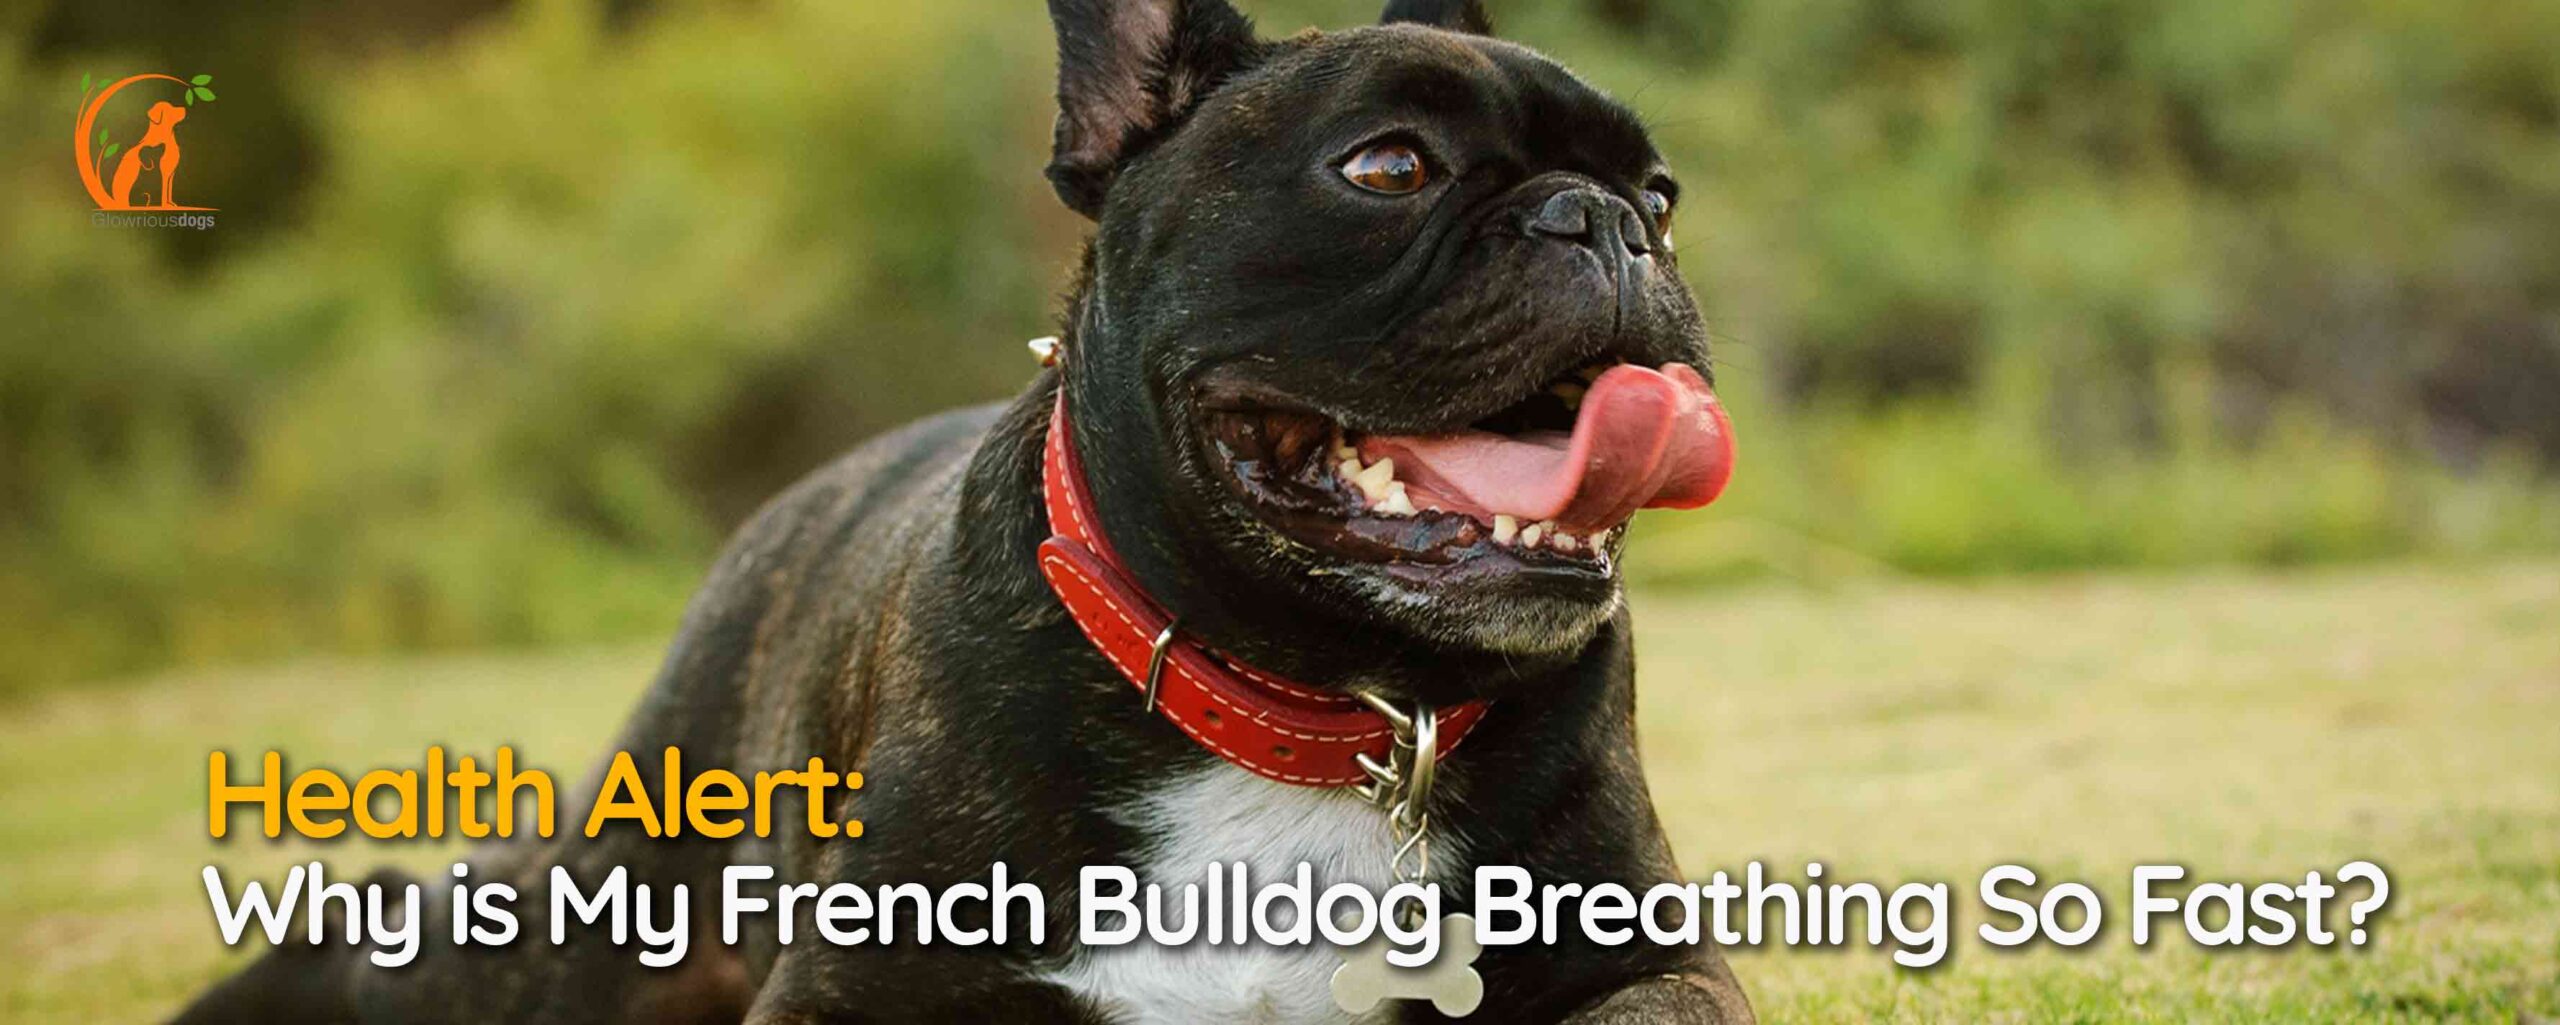 Health Alert: Why is My French Bulldog Breathing So Fast?